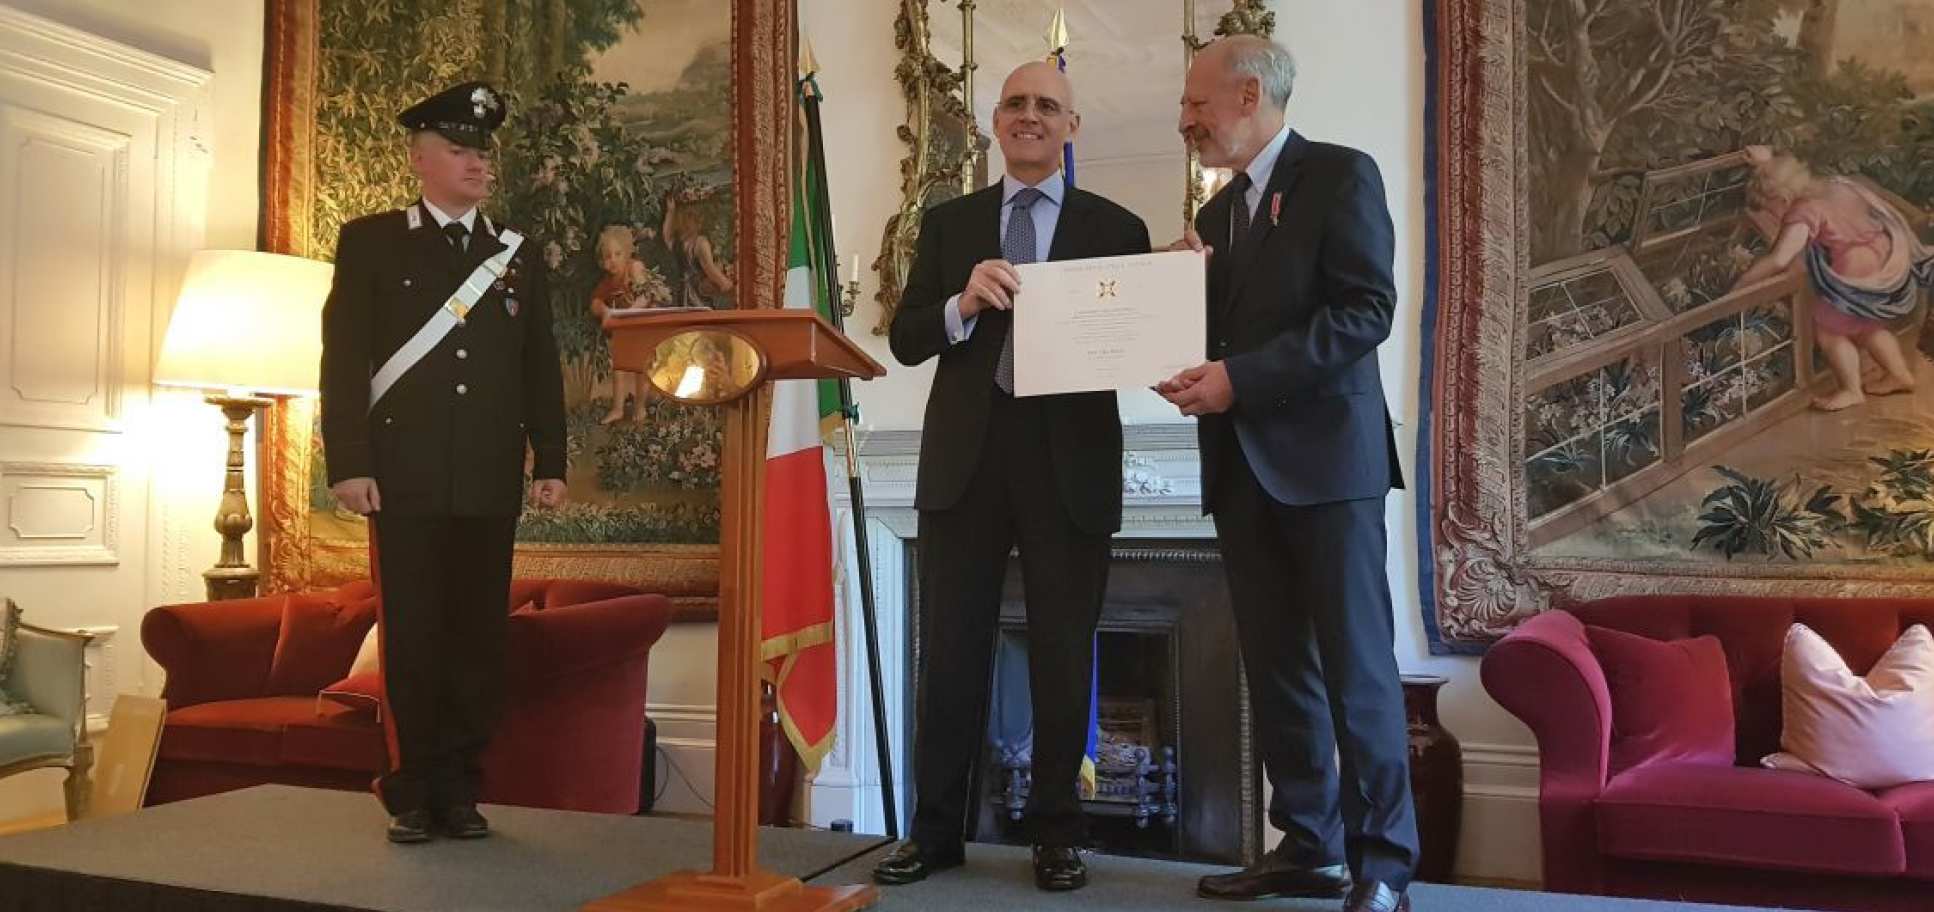 Professor Elio Riboli receiving his honour from the Italian Ambassador